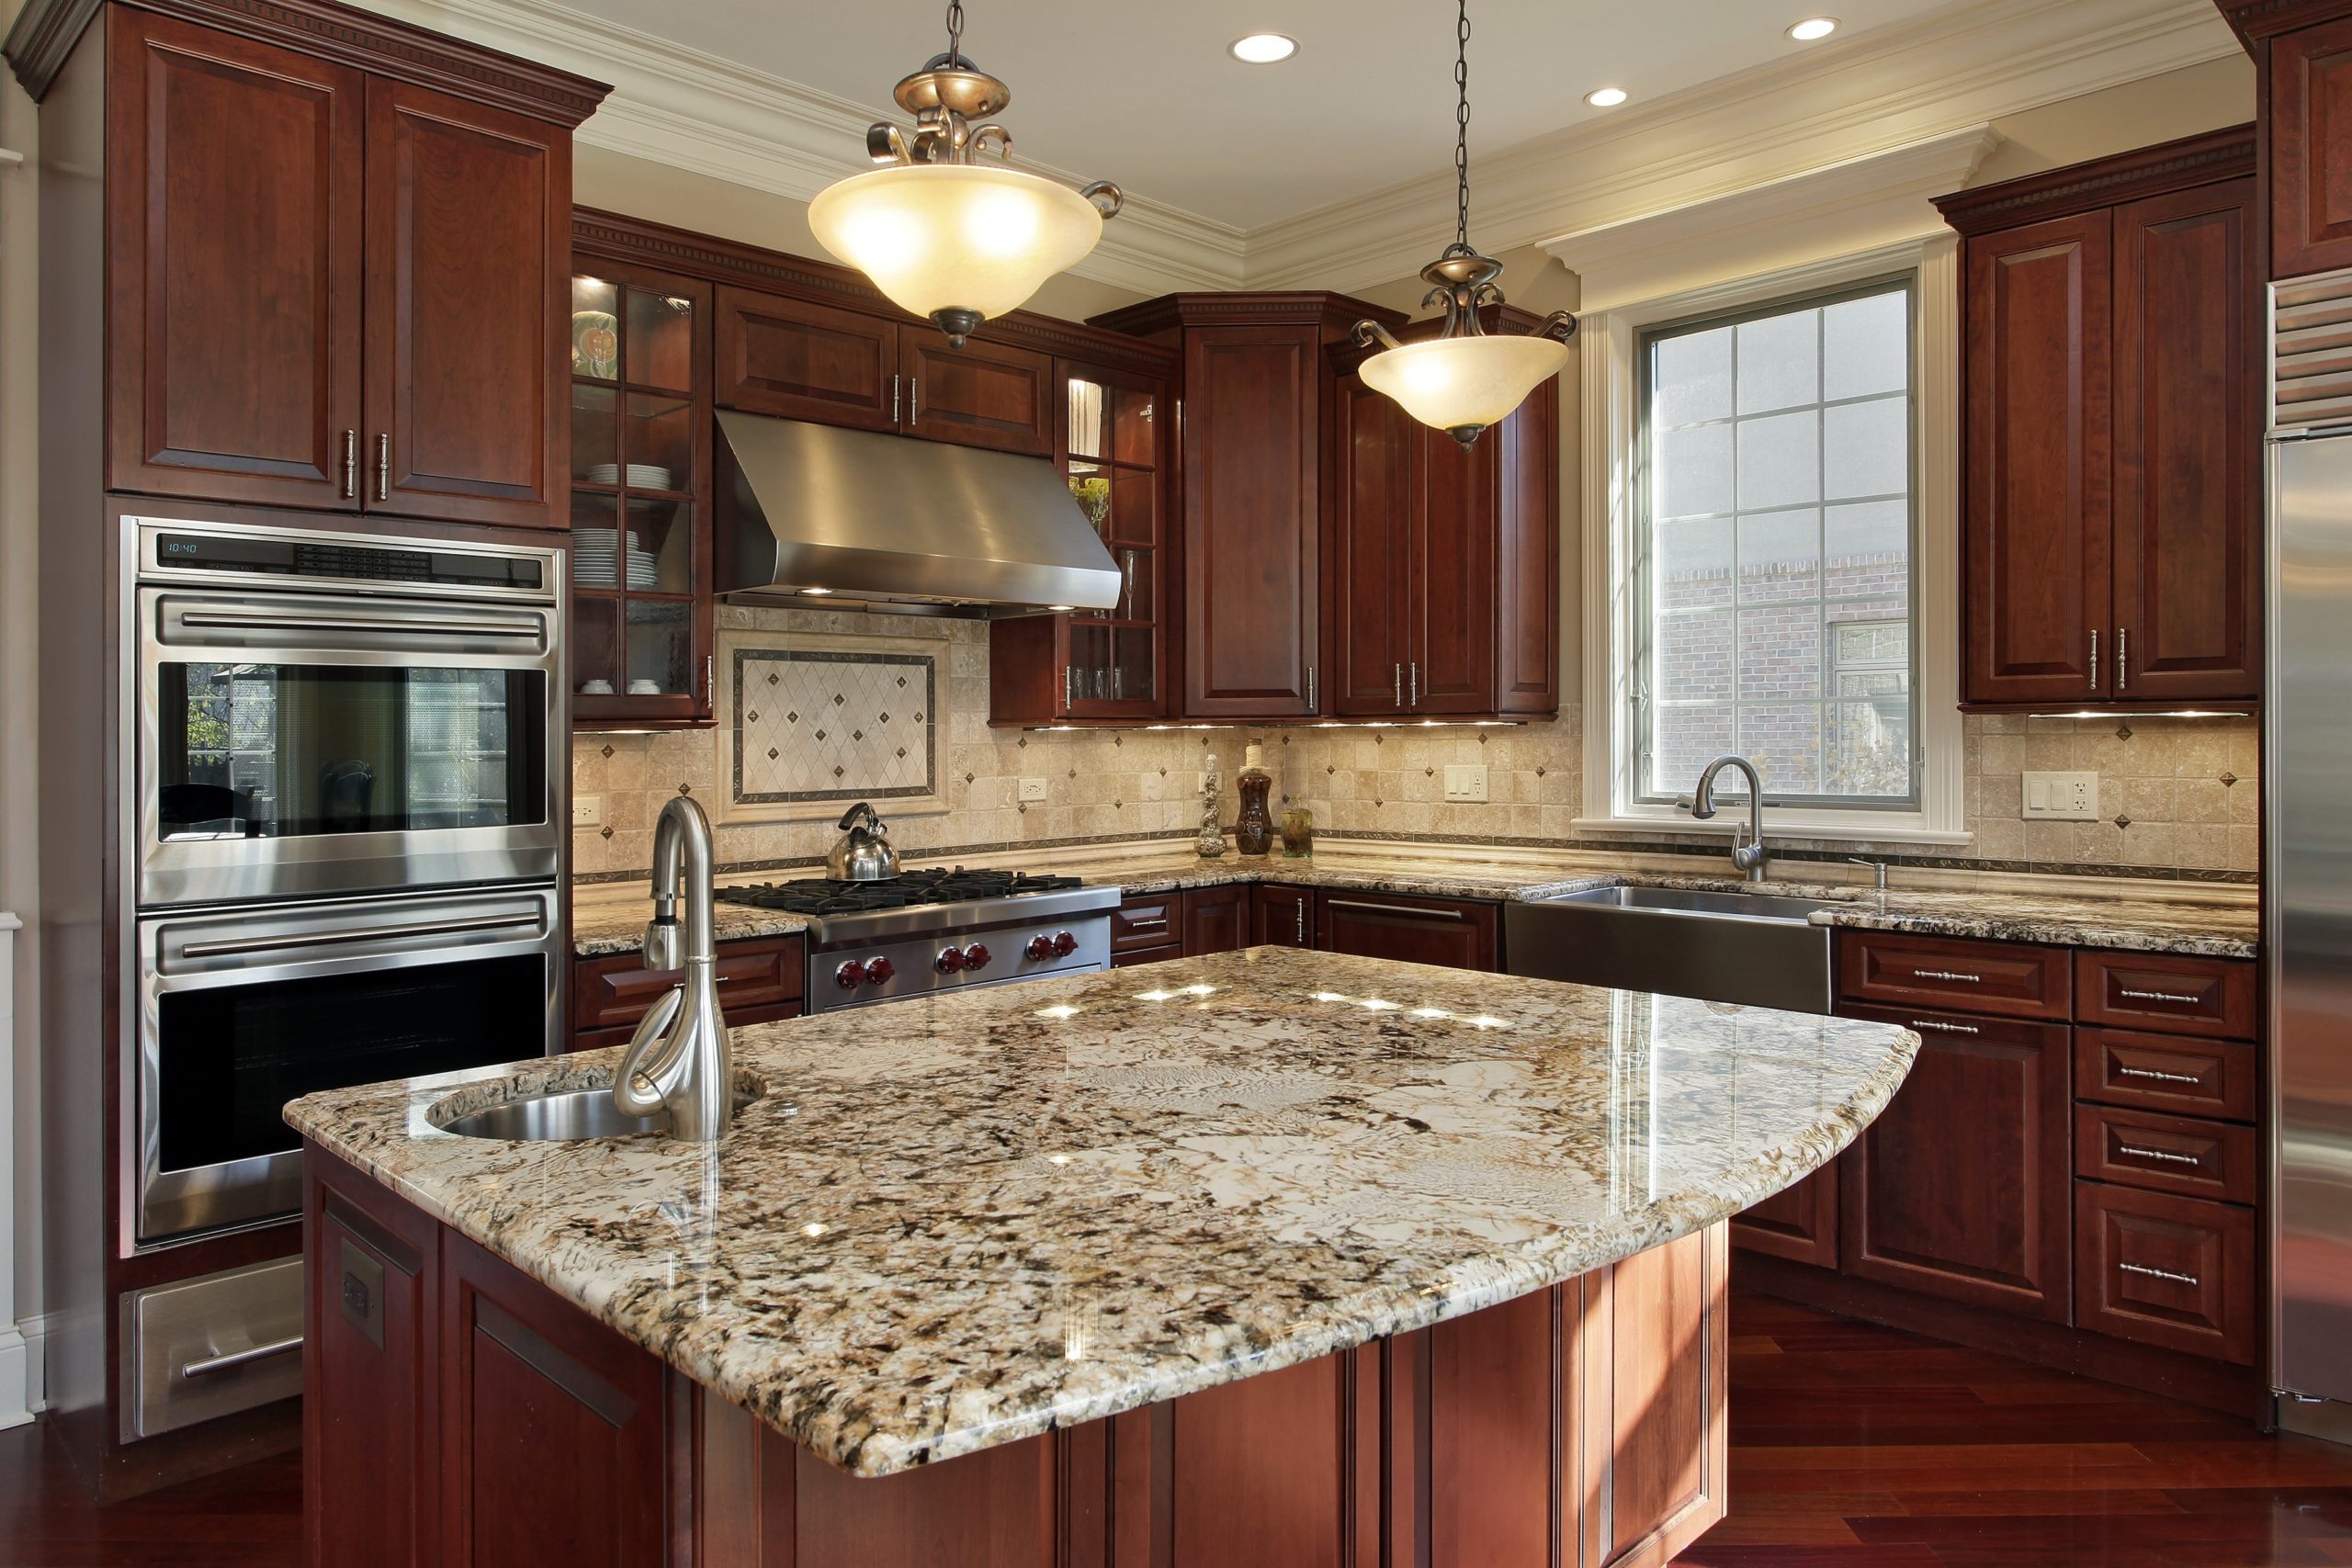 5 Pro Tips For Your Kitchen Counter Upgrade - Crowley's Granite & Quartz -  Countertops & Countertop Installation Services